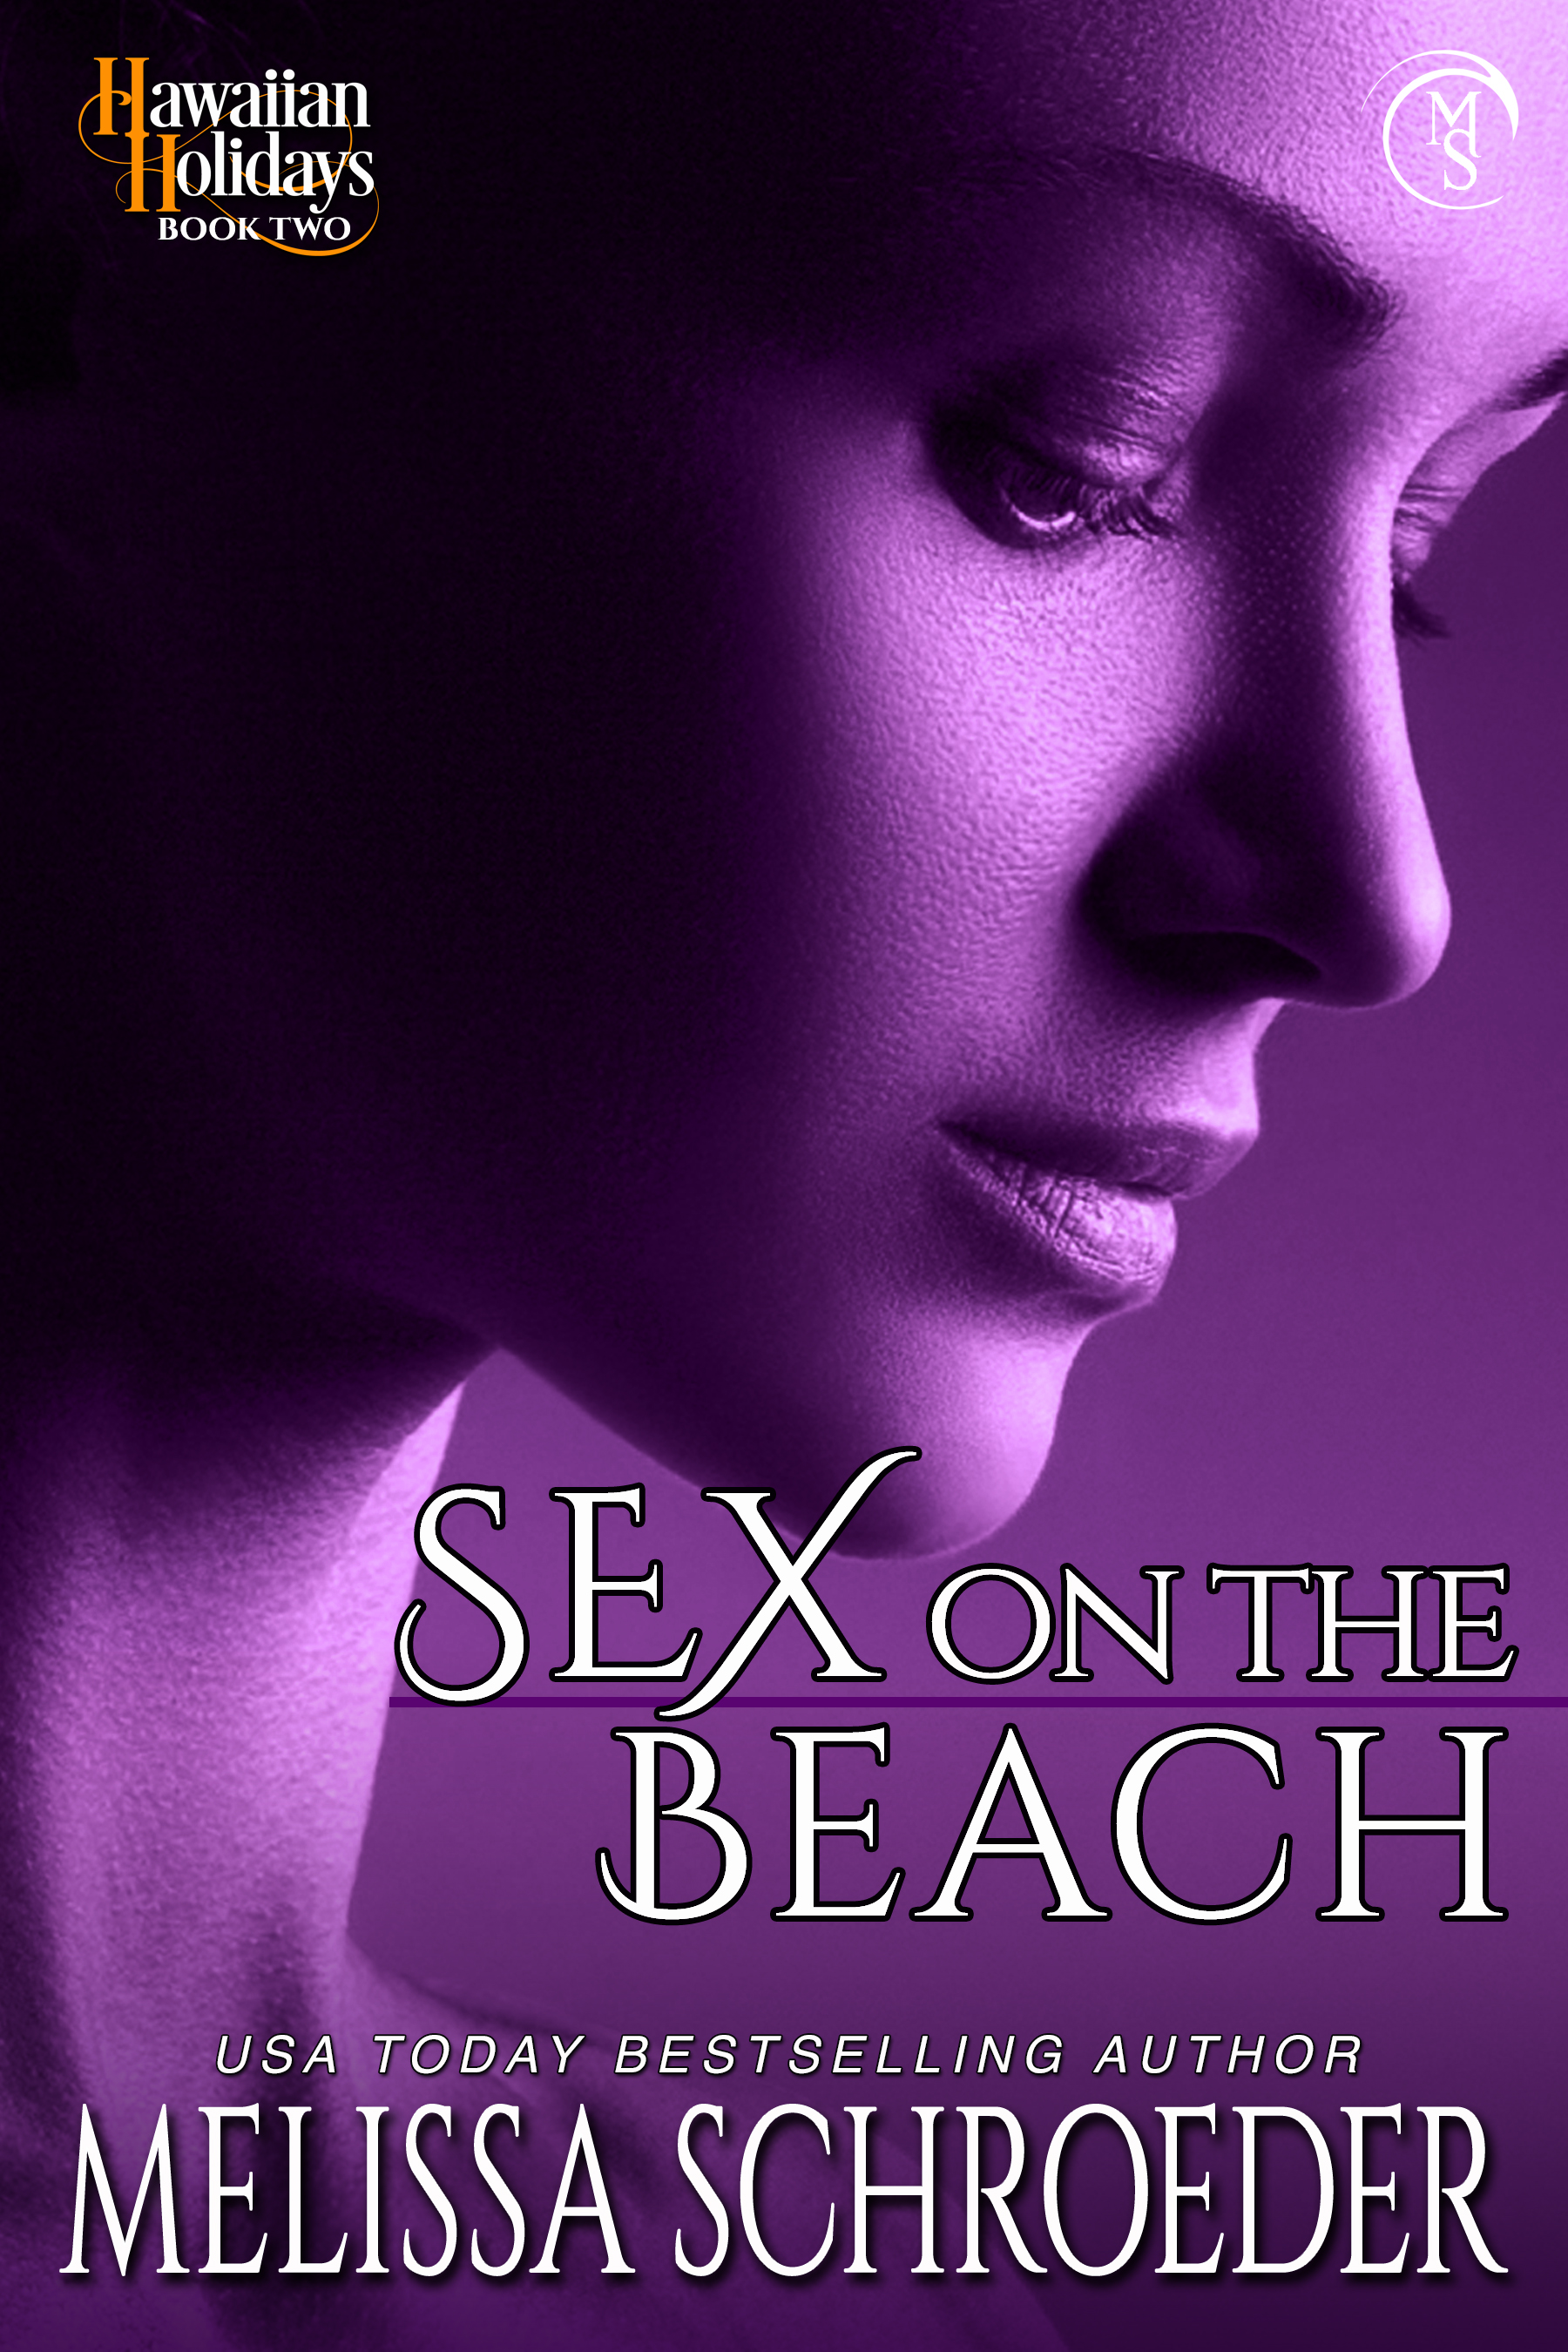 Sex on the Beach - Melissa Schroeder | Author of the Harmless Series